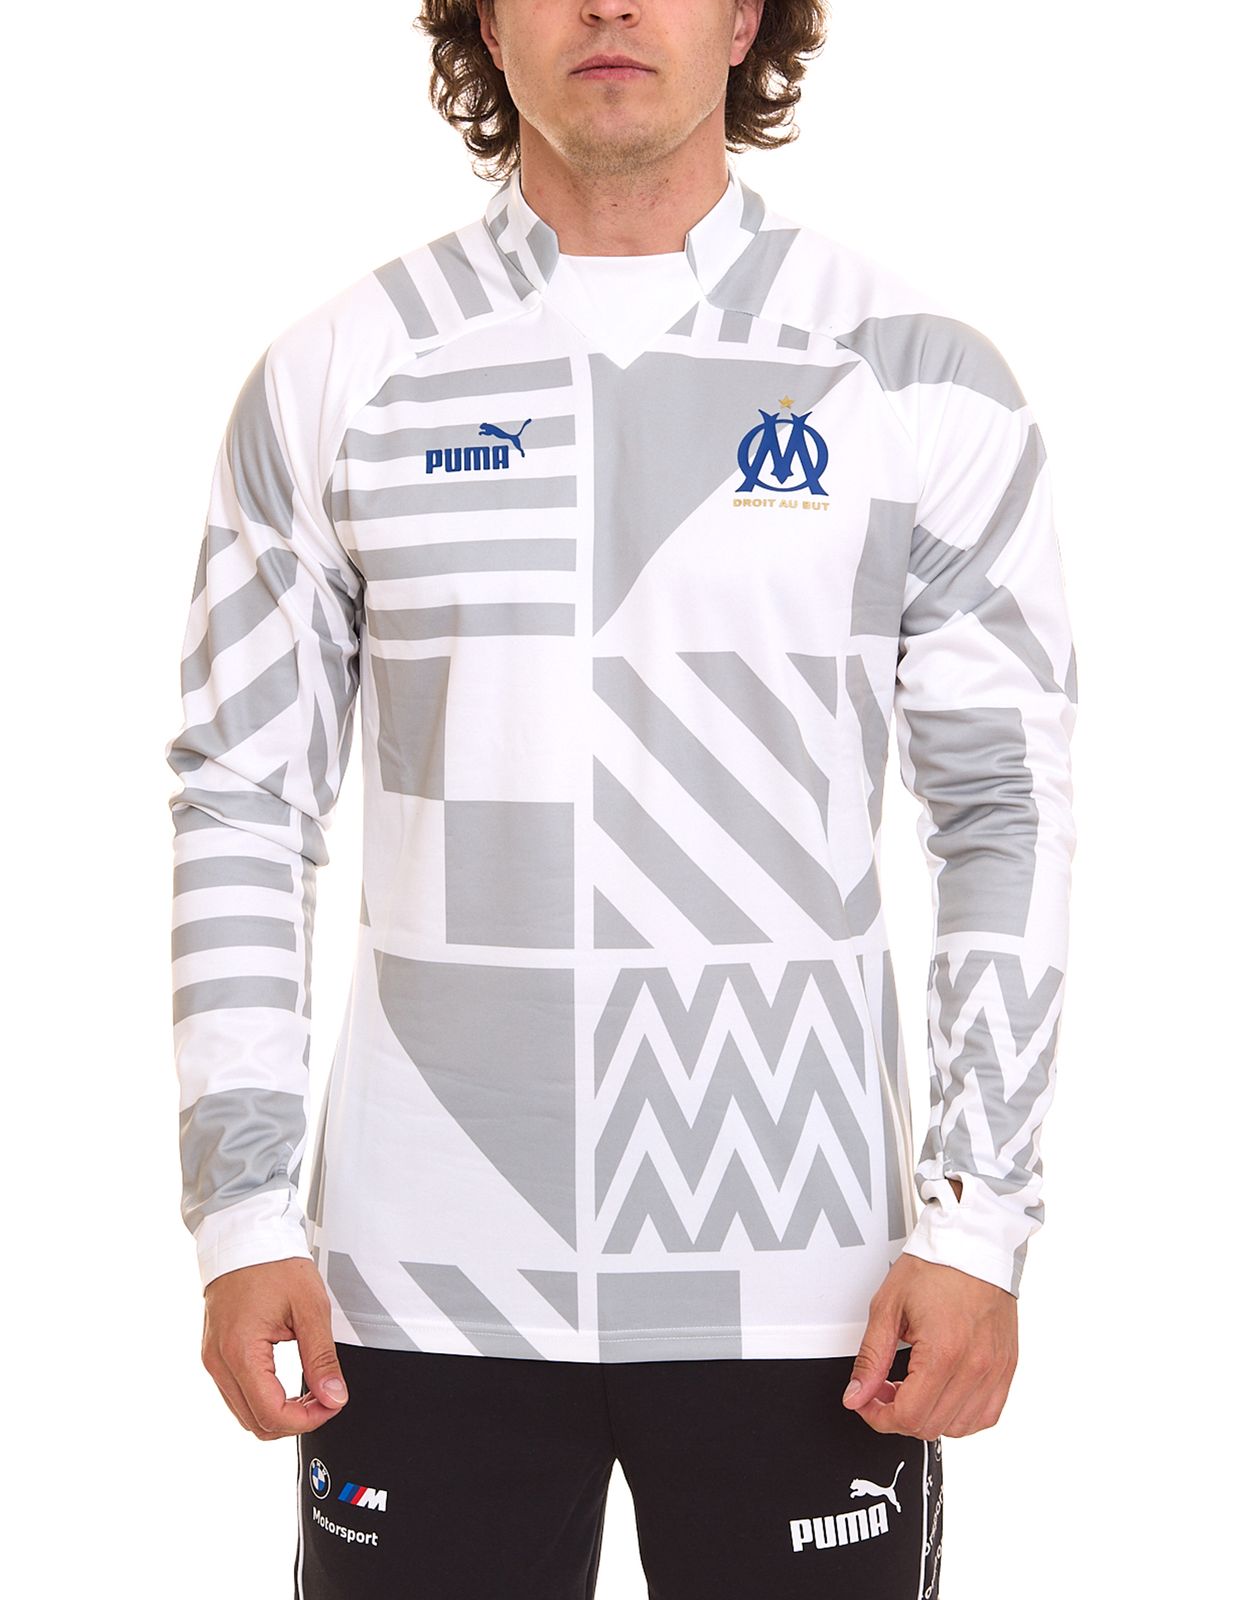 PUMA Marseille Droit Au But Prematch Fußball-Trikot mit dryCELL Trainings-Shirt 767268 01 Weiß/Grau von PUMA